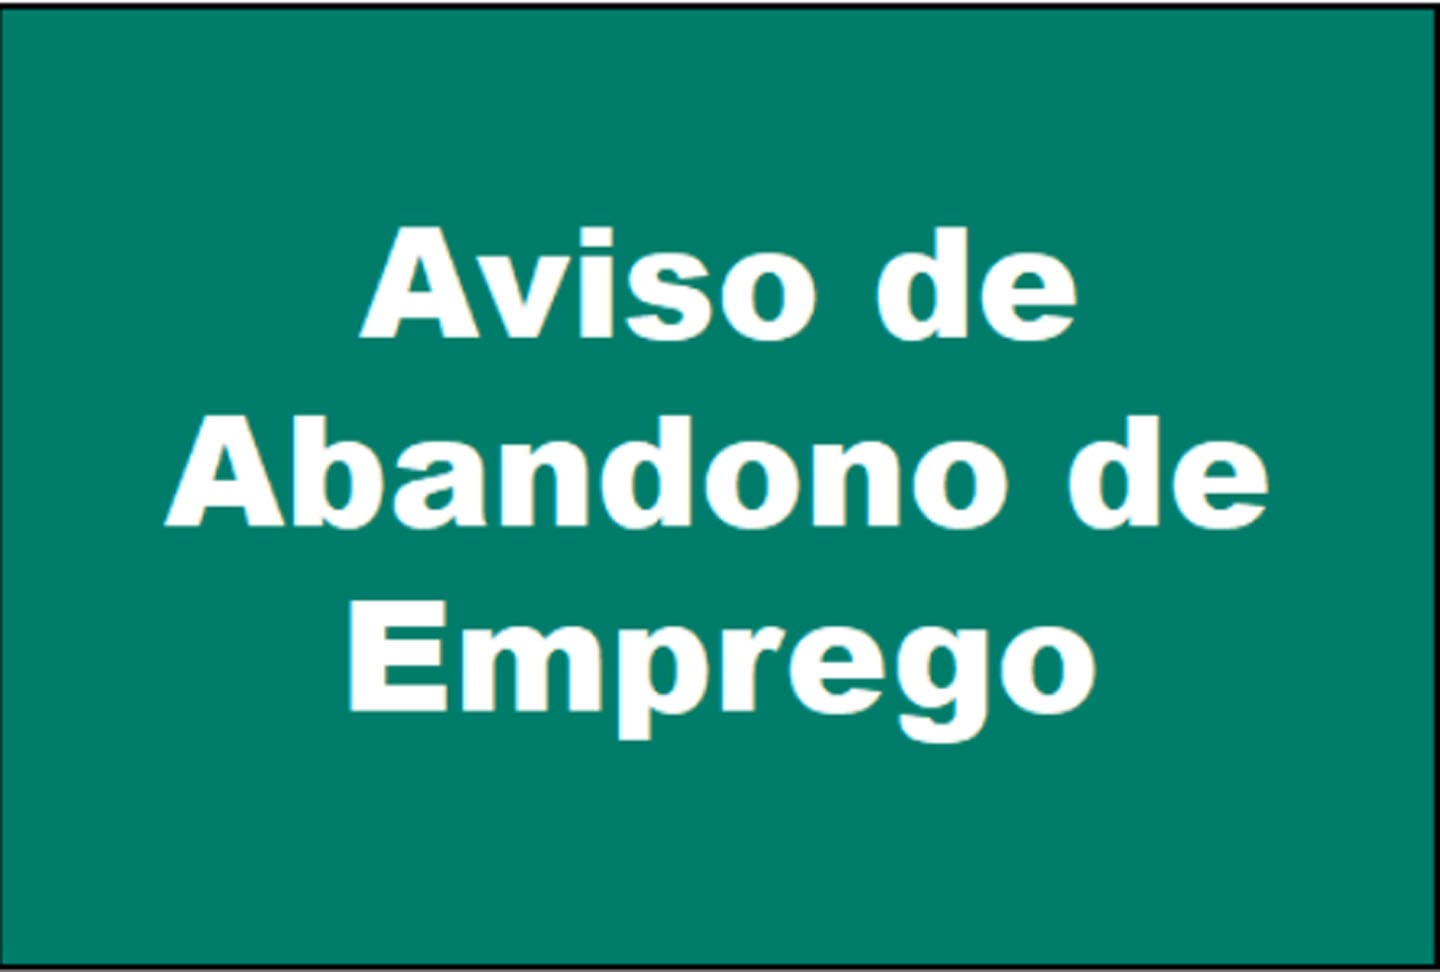 AVISOD DE ABANDONO DE EMPREGO